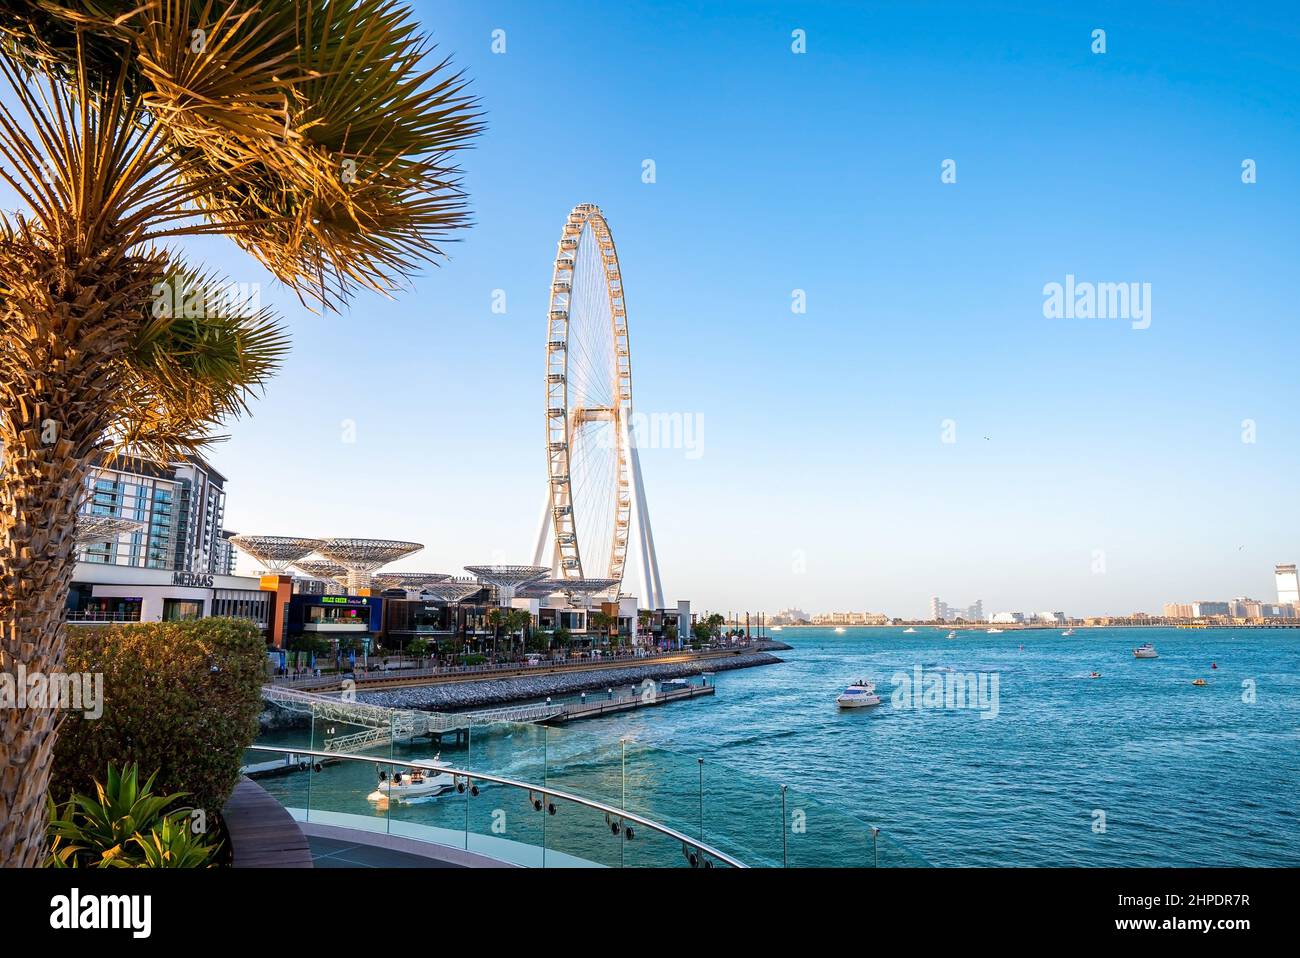 Ain Dubai, the biggest ferris wheel in the world. Stock Photo